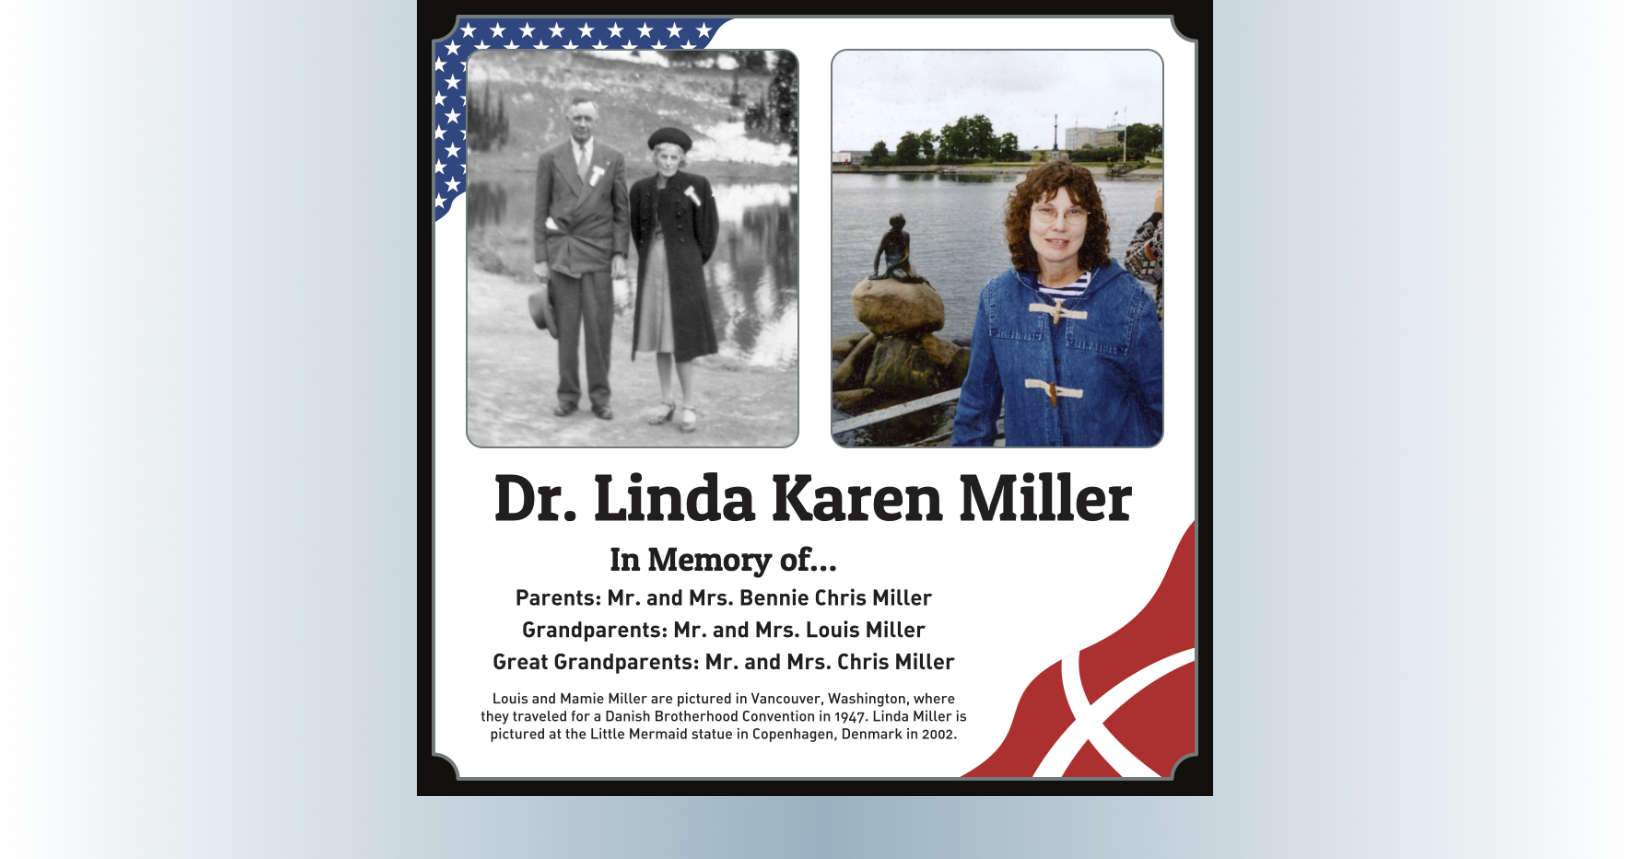 Linda Karen Miller